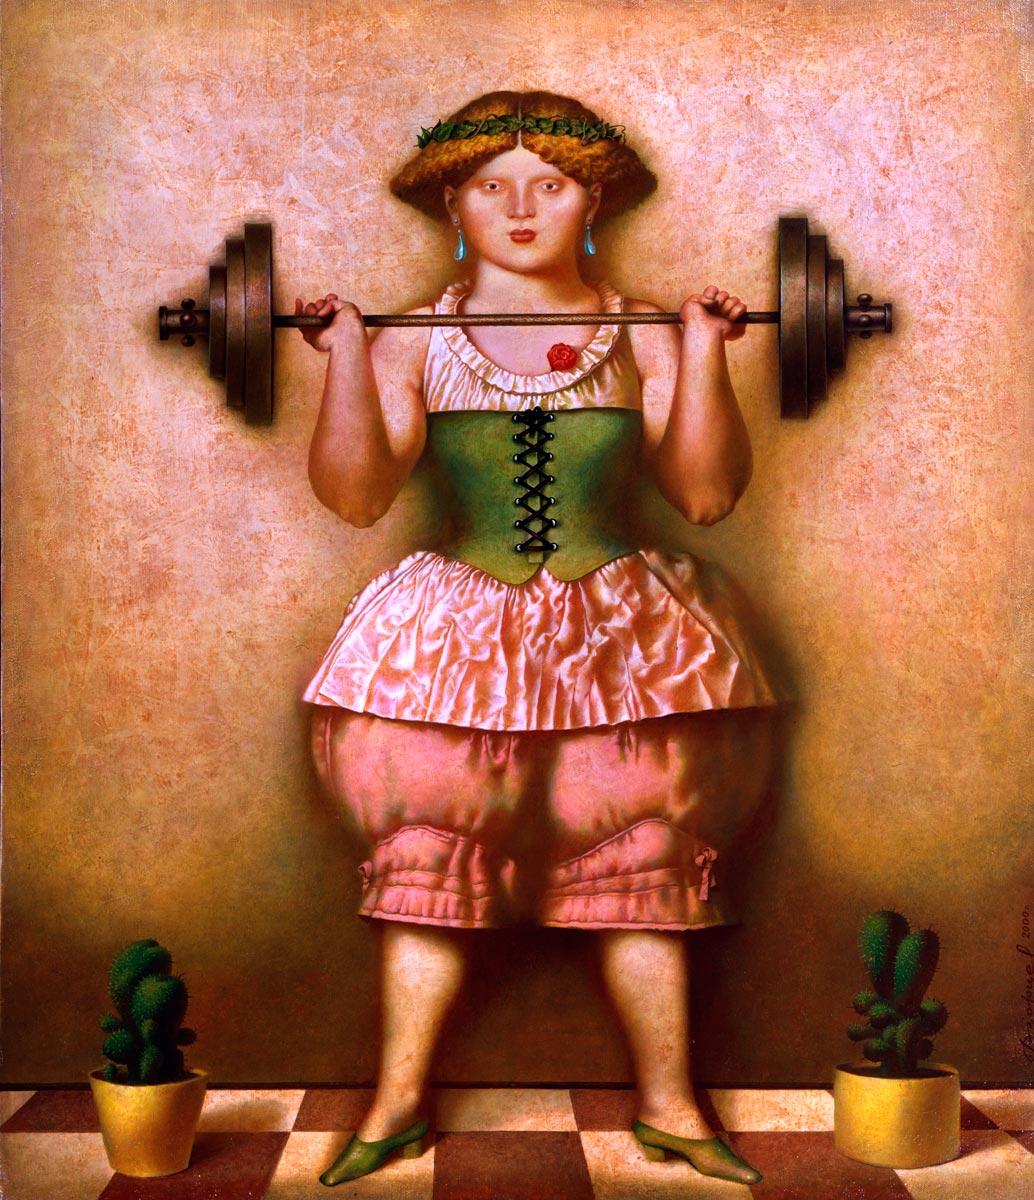 Weight-lifting girl